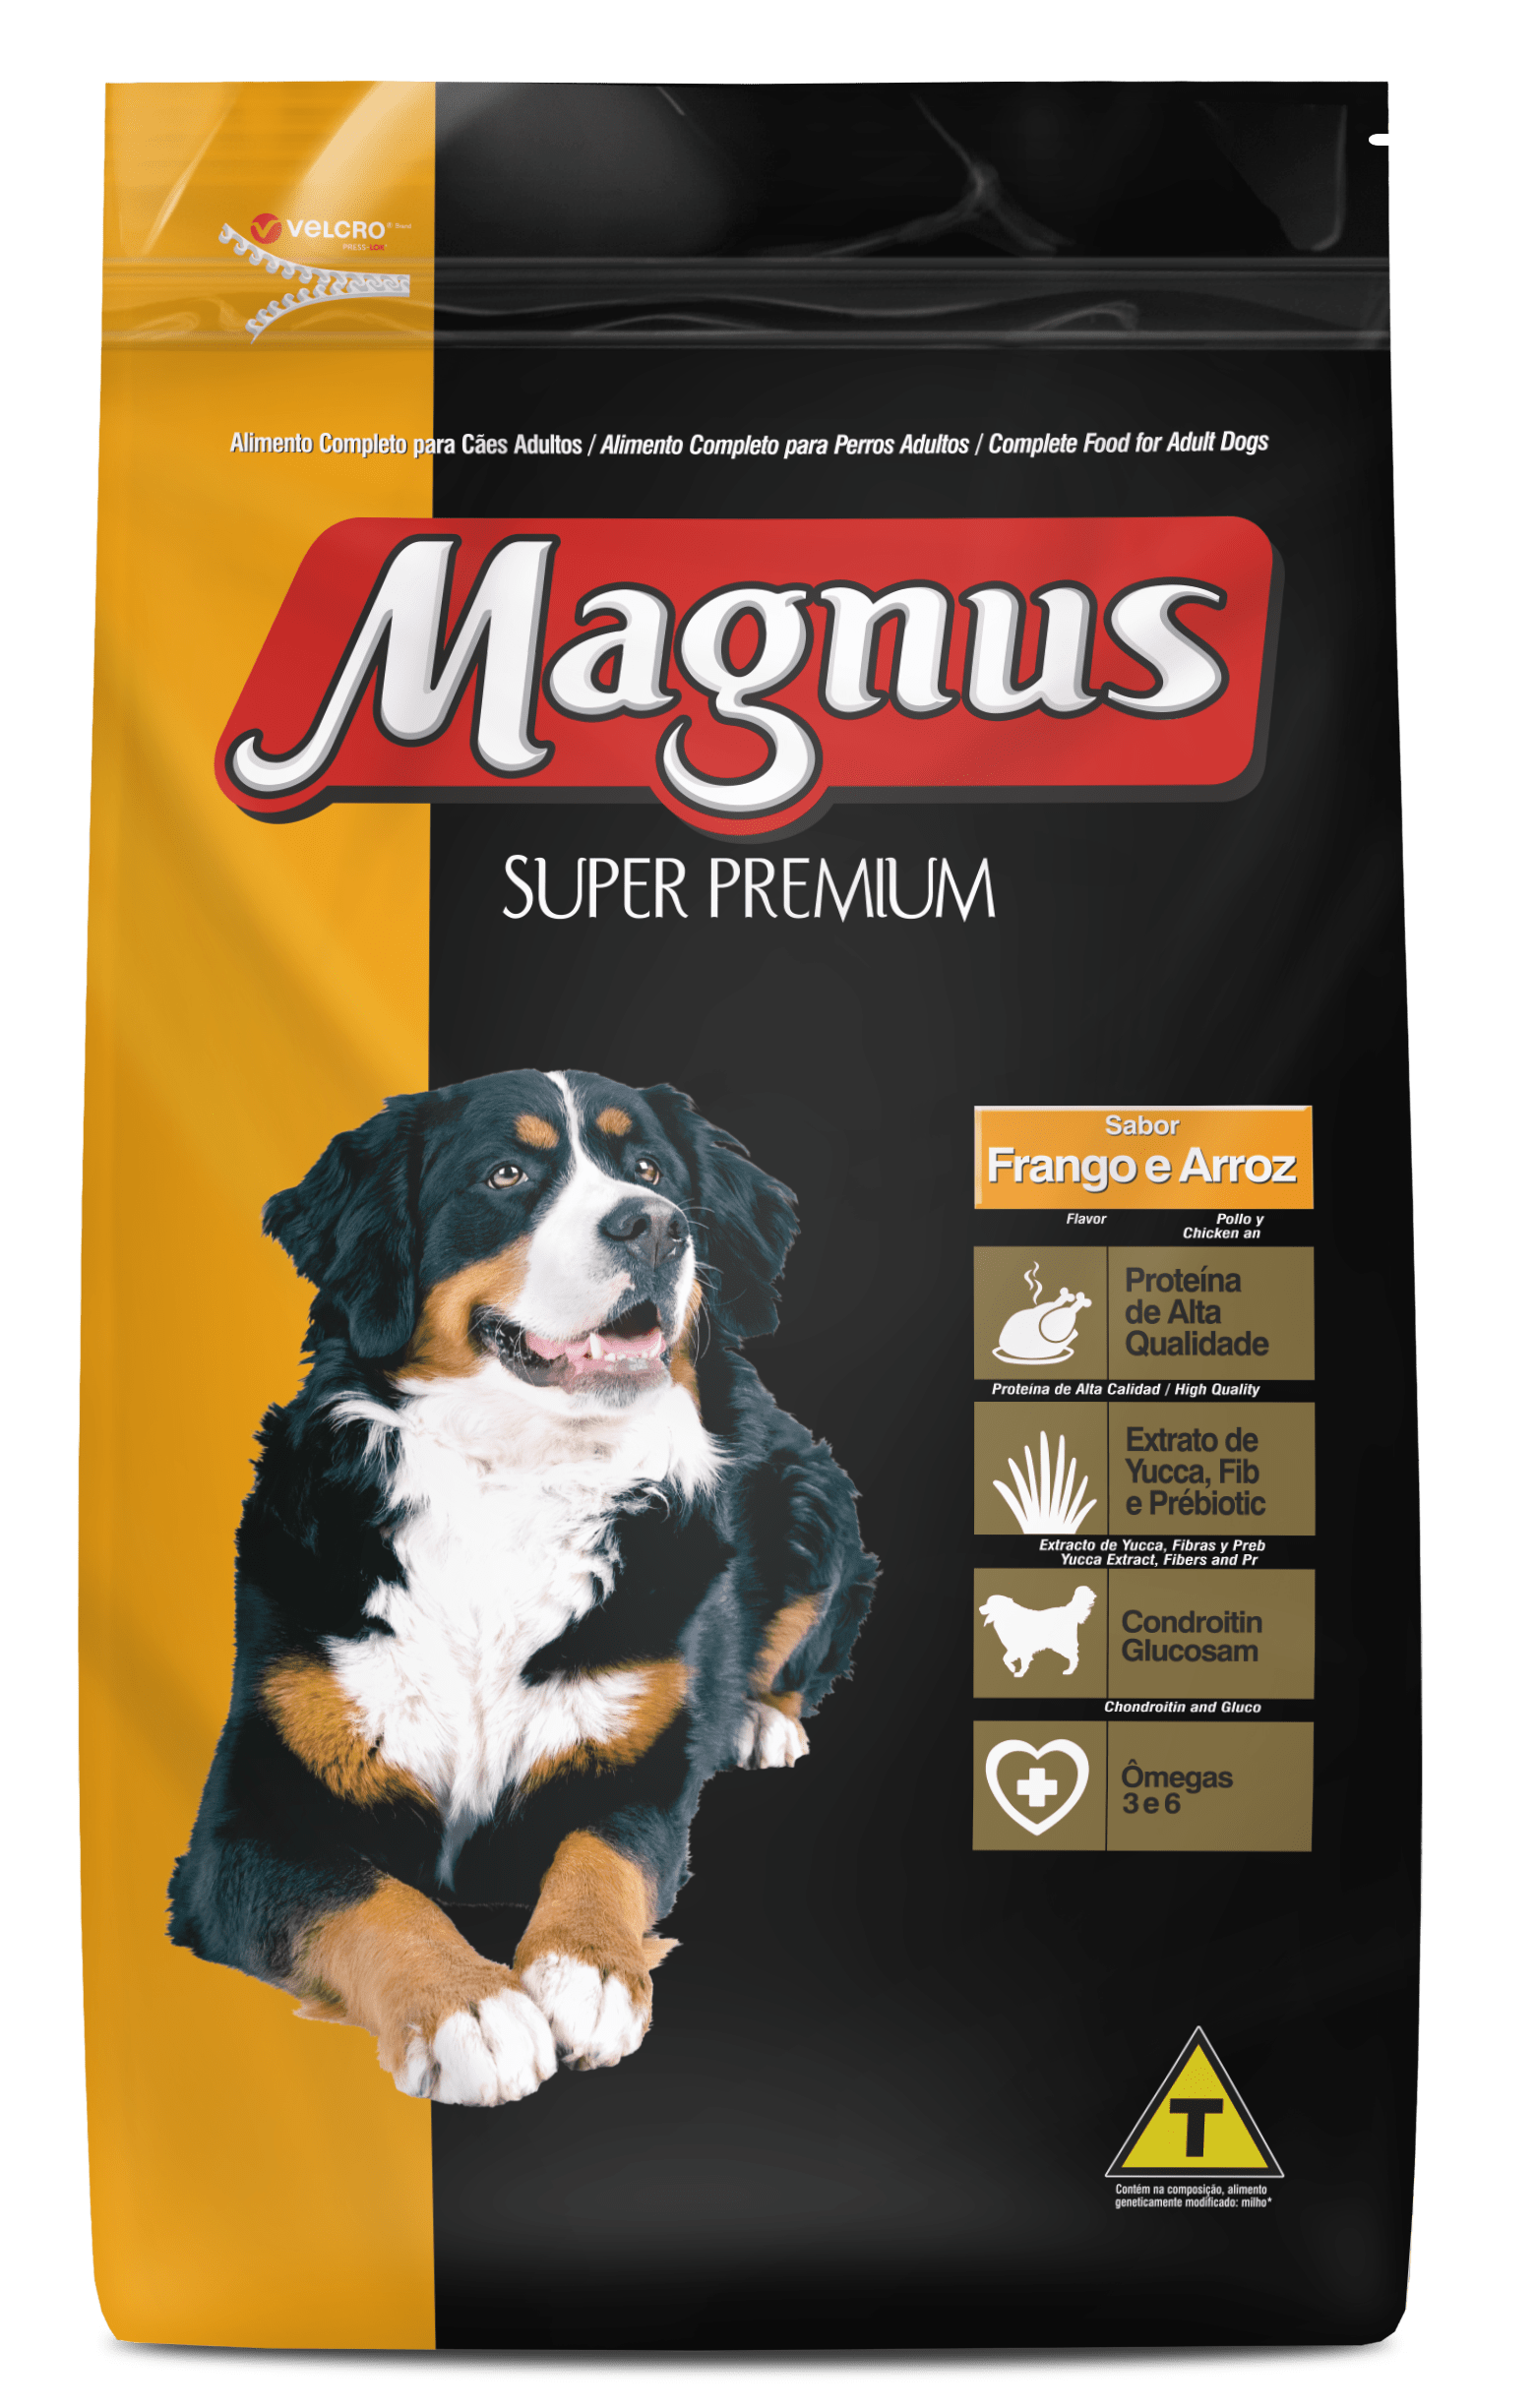 Magnus Super Premium Adult Dogs Chicken and Rice Flavor